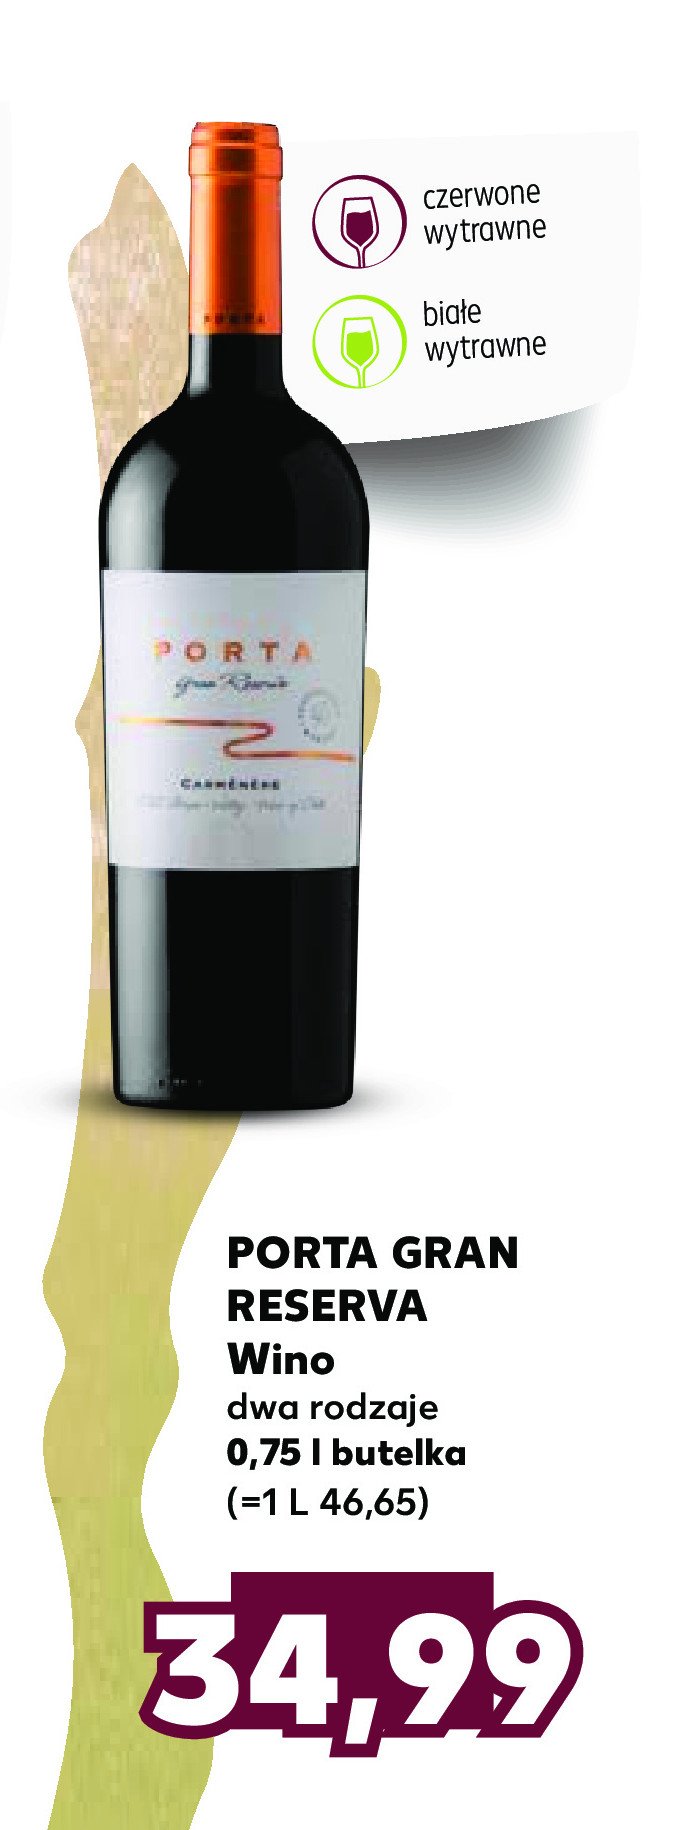 Wino wytrawne Porta gran reserva promocja